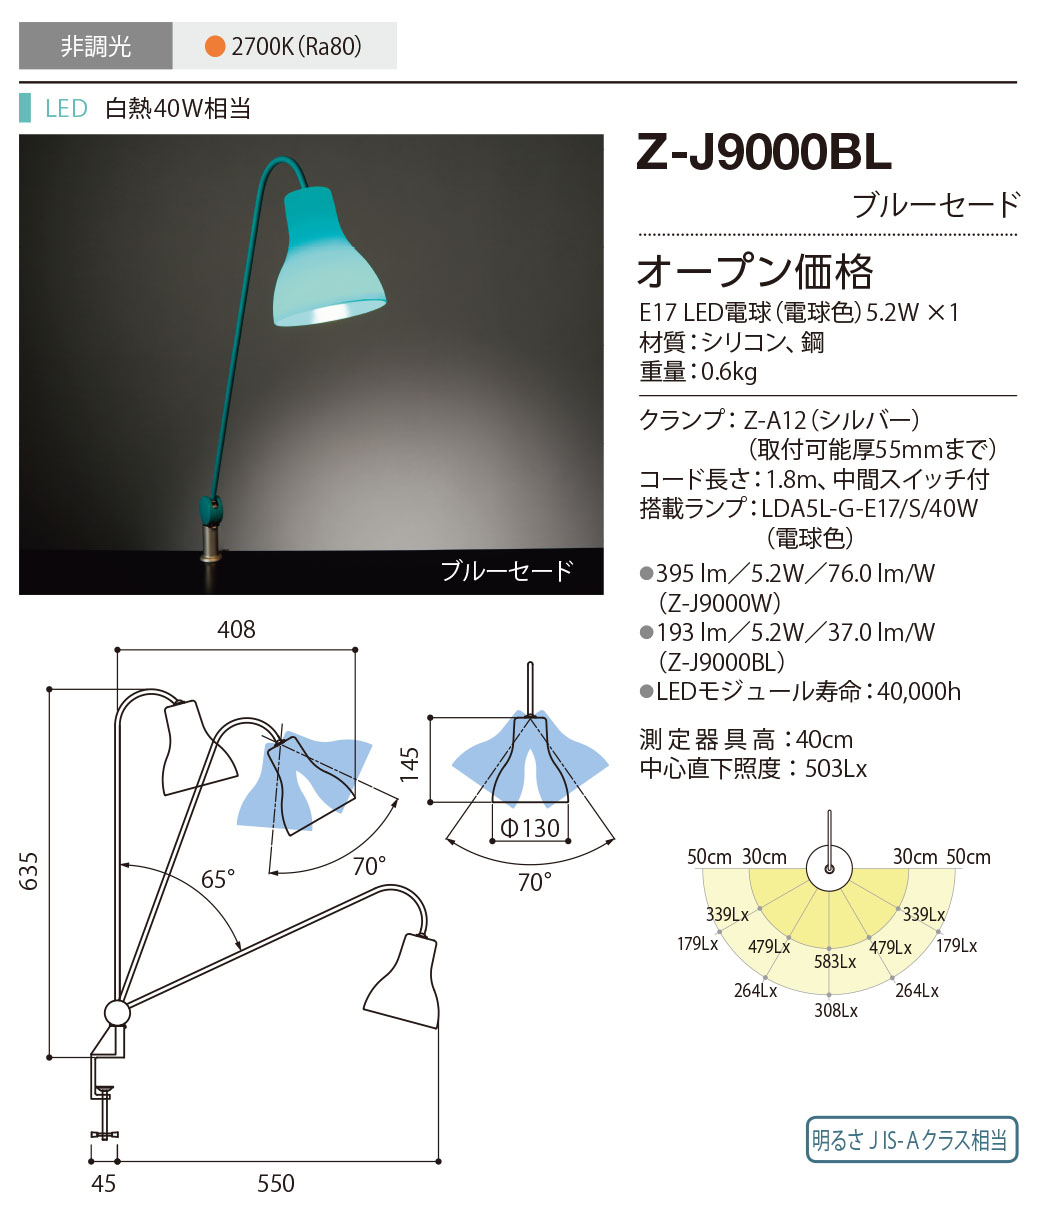 山田照明 Z-J9000BL